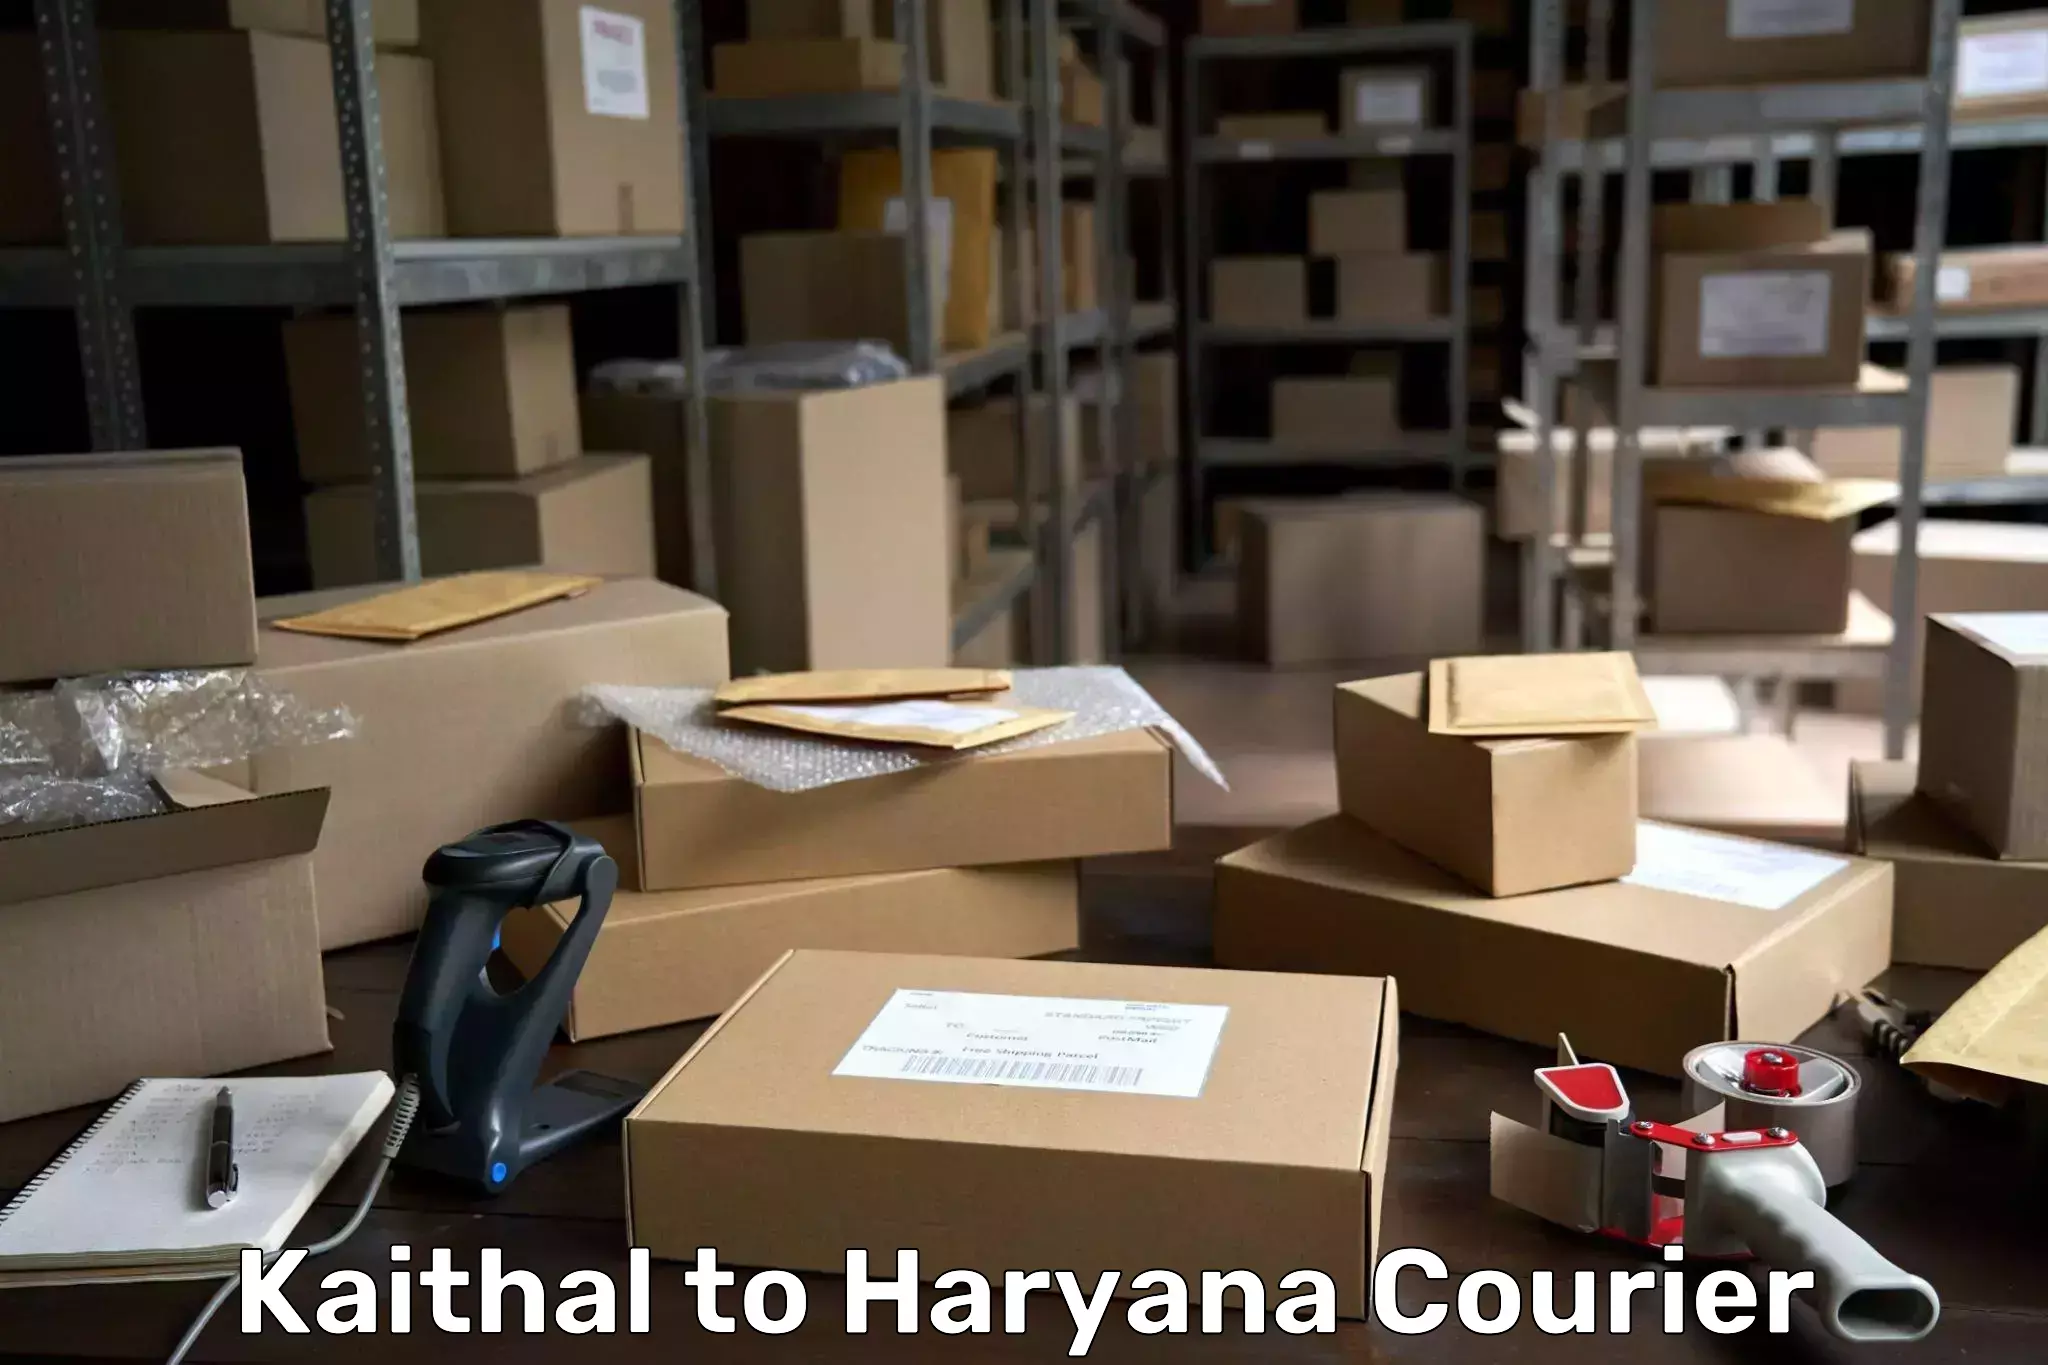 Advanced shipping technology Kaithal to NCR Haryana